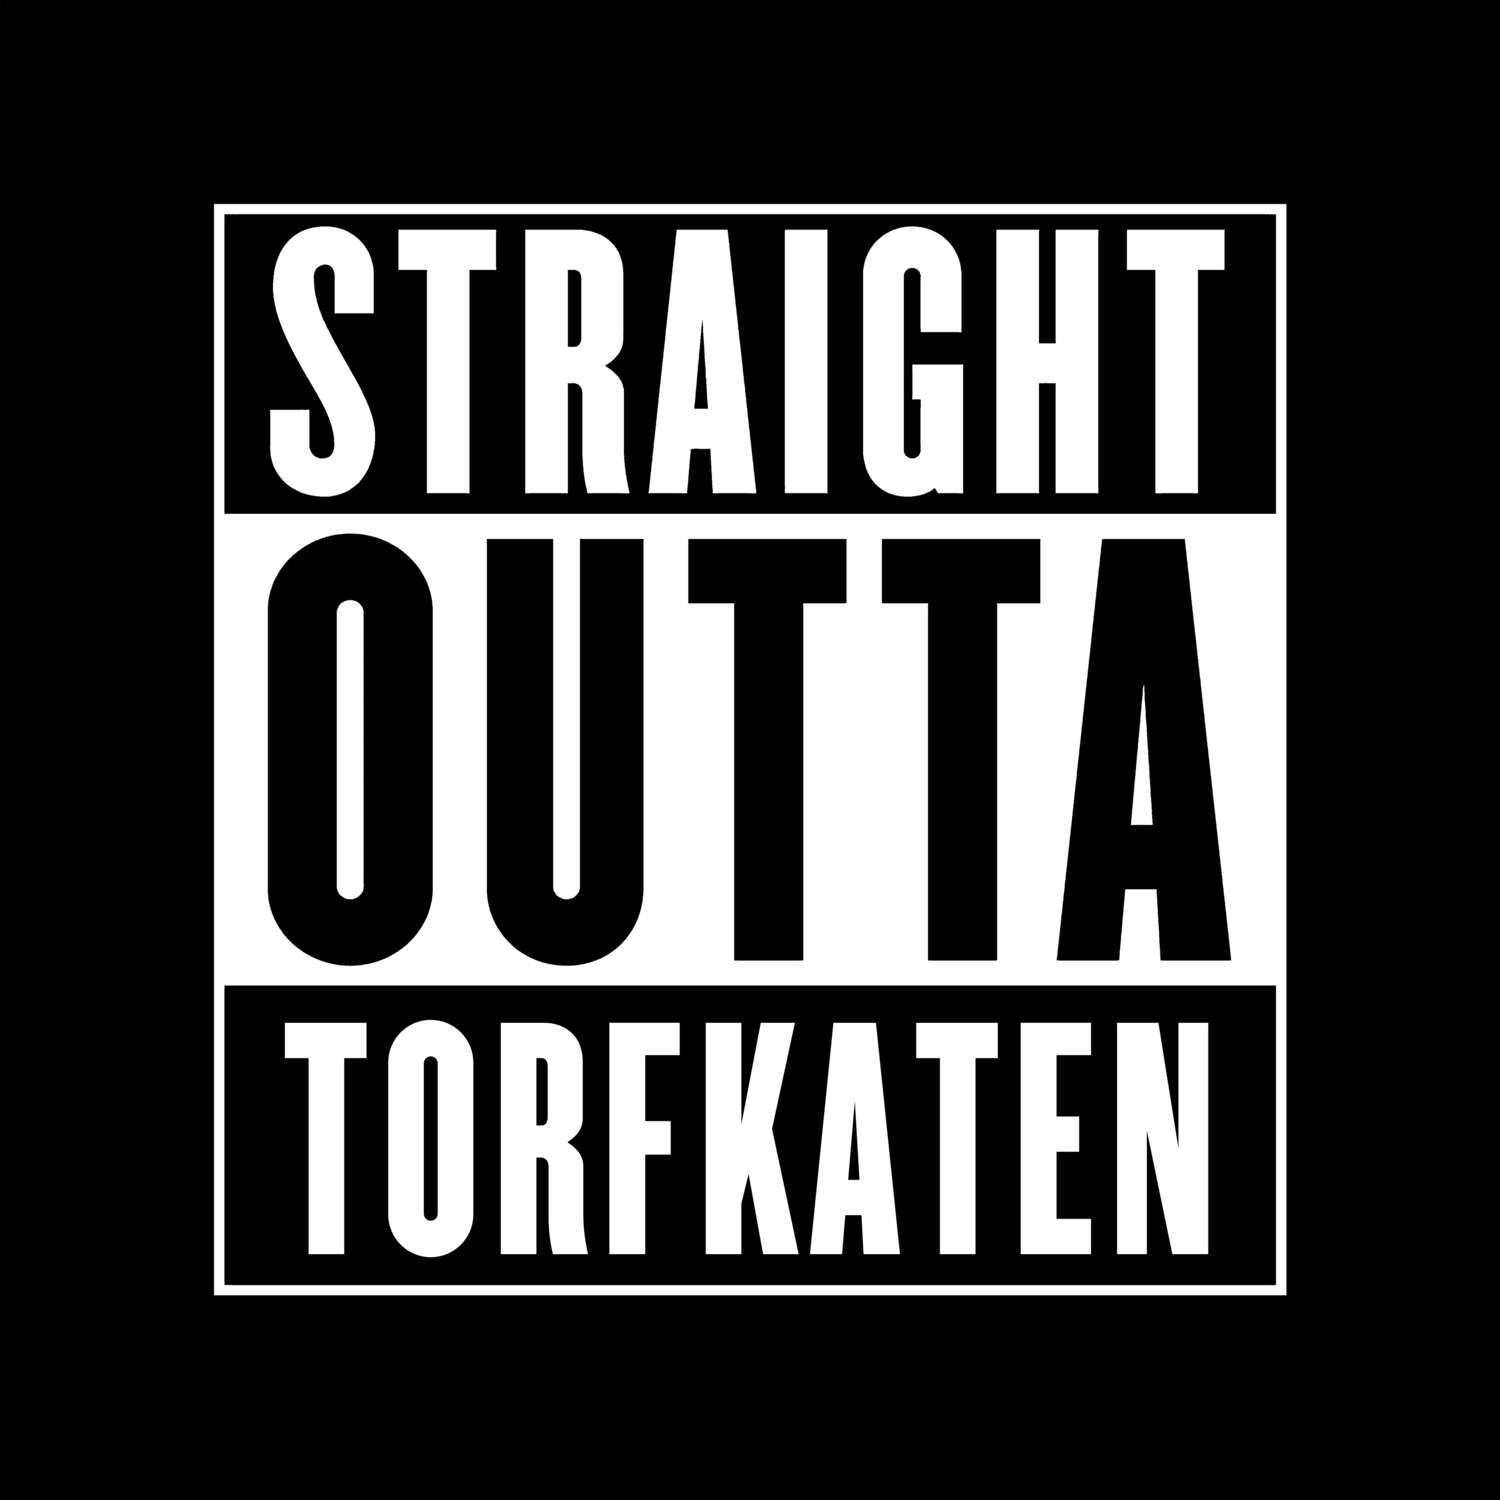 Torfkaten T-Shirt »Straight Outta«